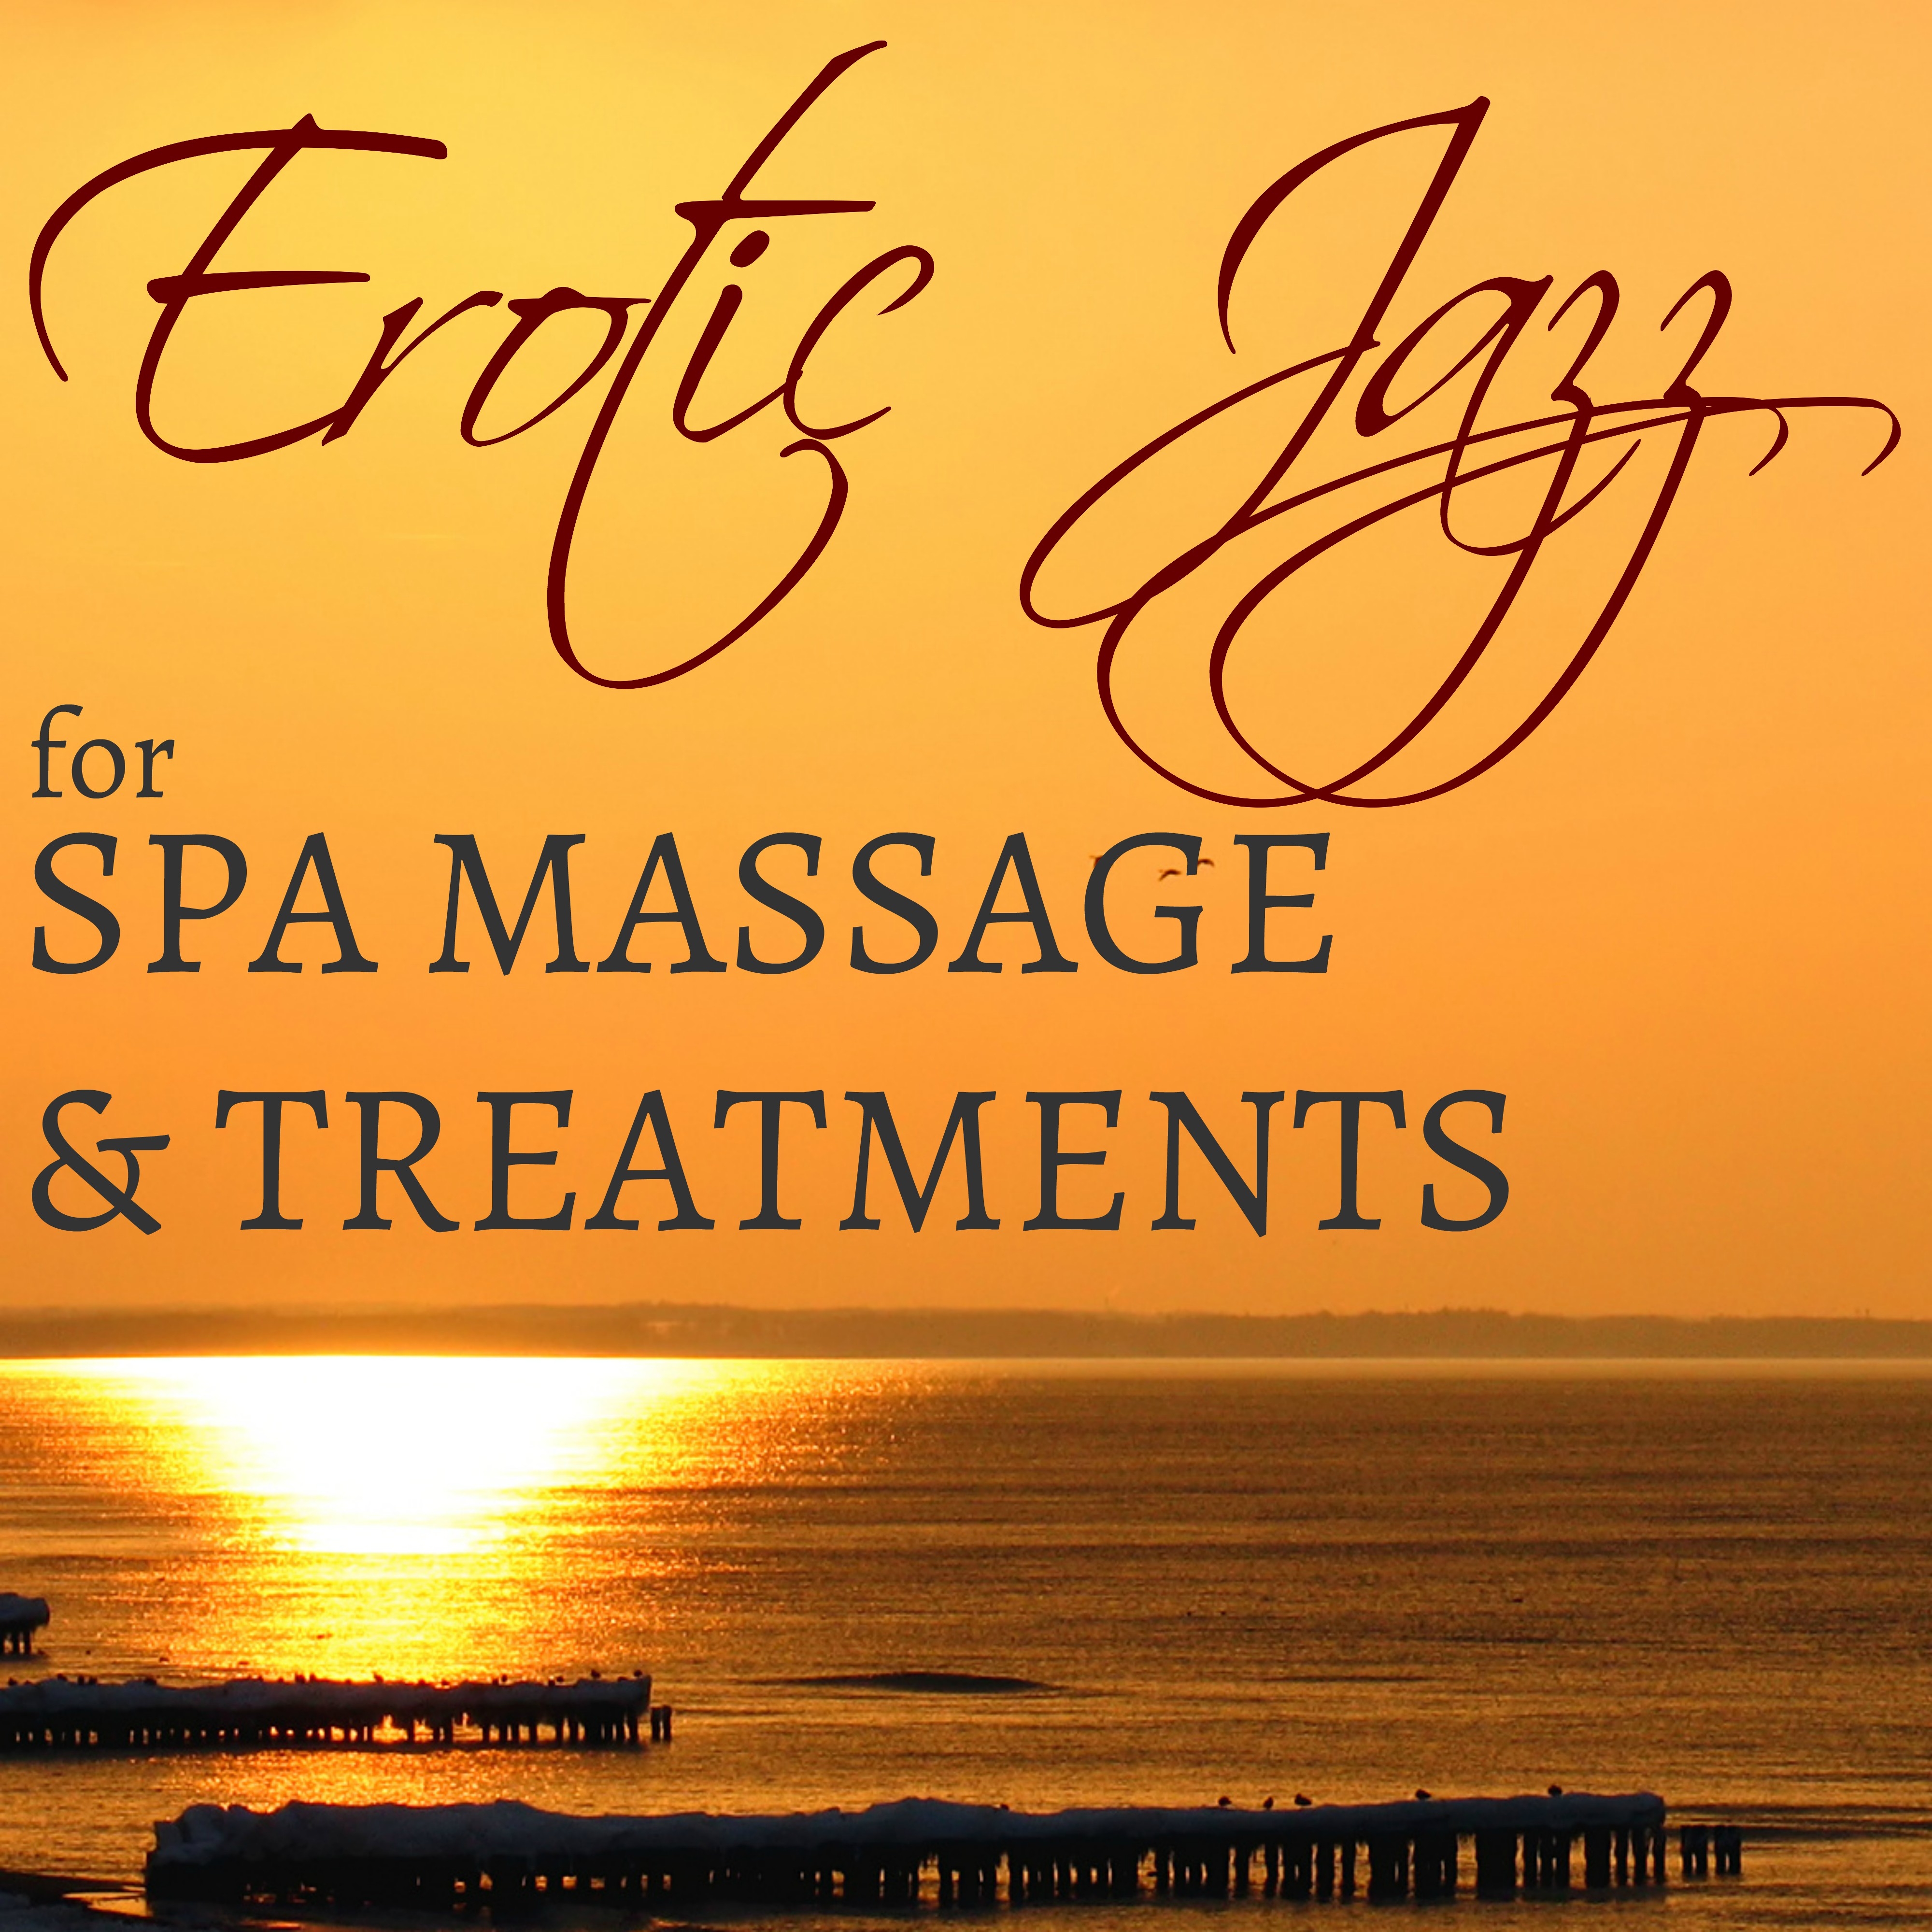 Erotic Jazz for Spa Massage  Treatments  Erotic Lounge Music  Cool Jazz for Relaxation, Hot Stone Massage, Sauna  Spa